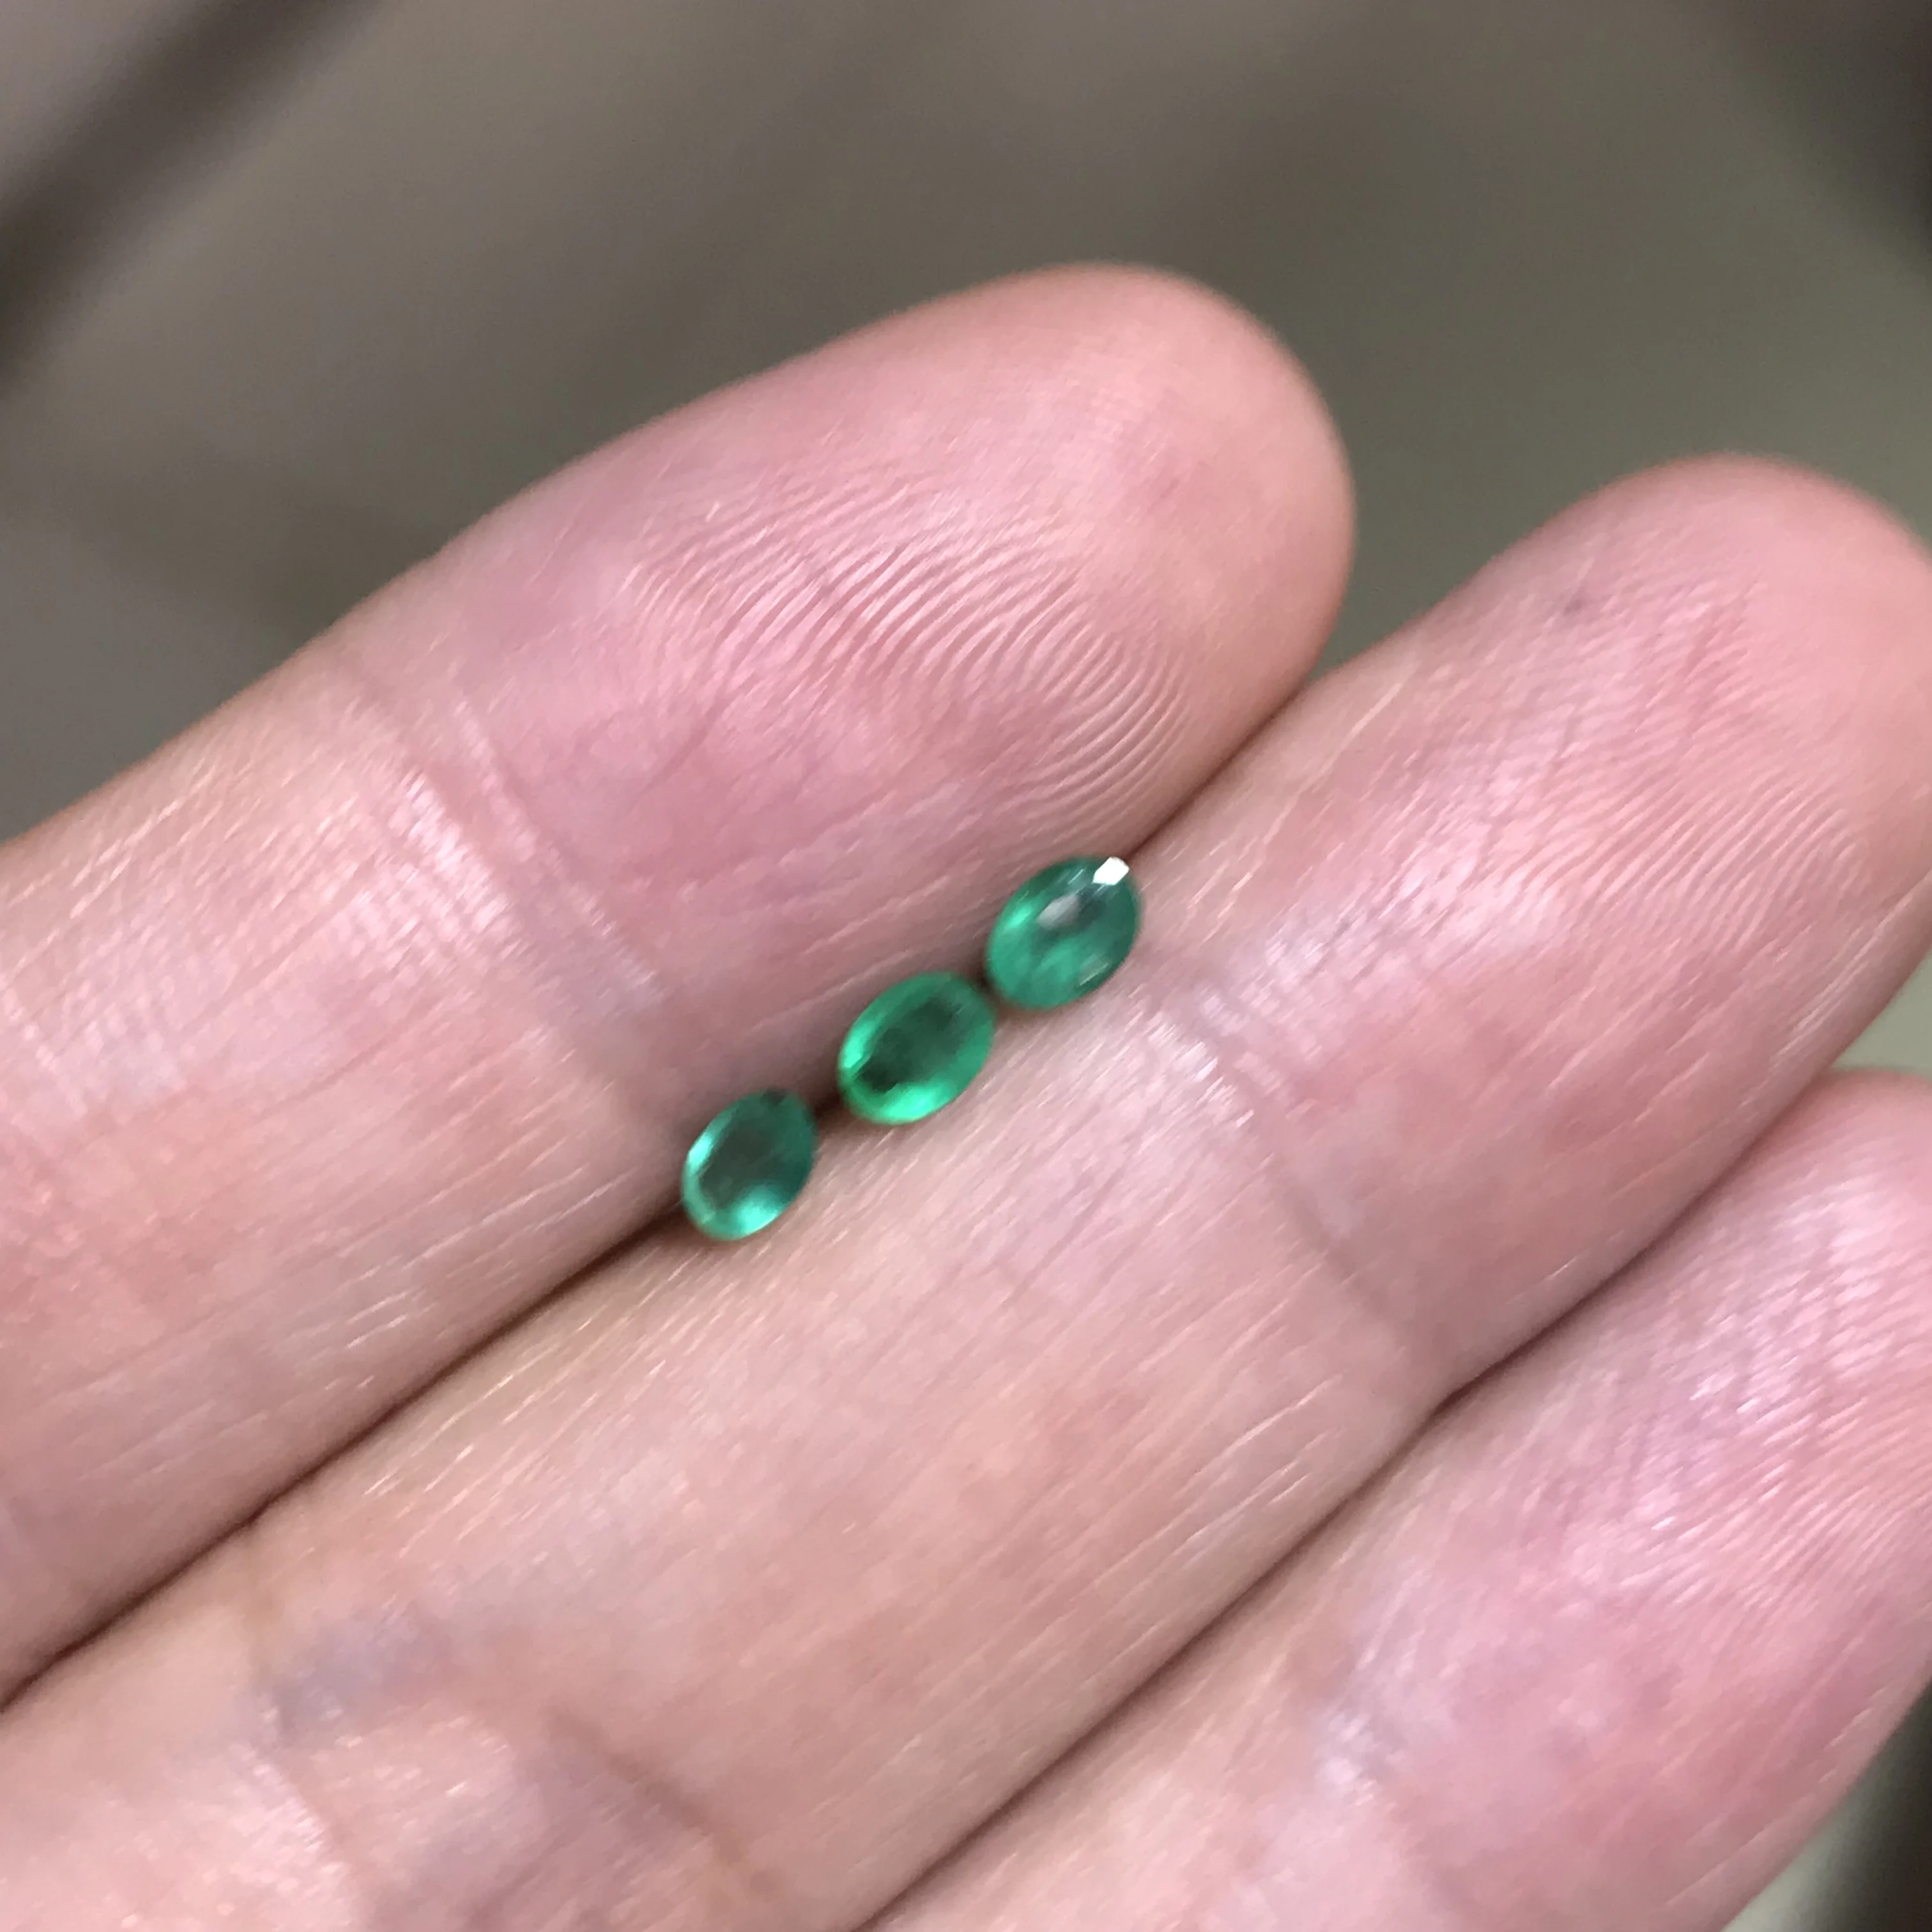 

3mm * 4mm Oval Cut Real Emerald Loose Gemstone 100% Natural SI Emerald Loose Gemstone for Ring Earrings or Pendan